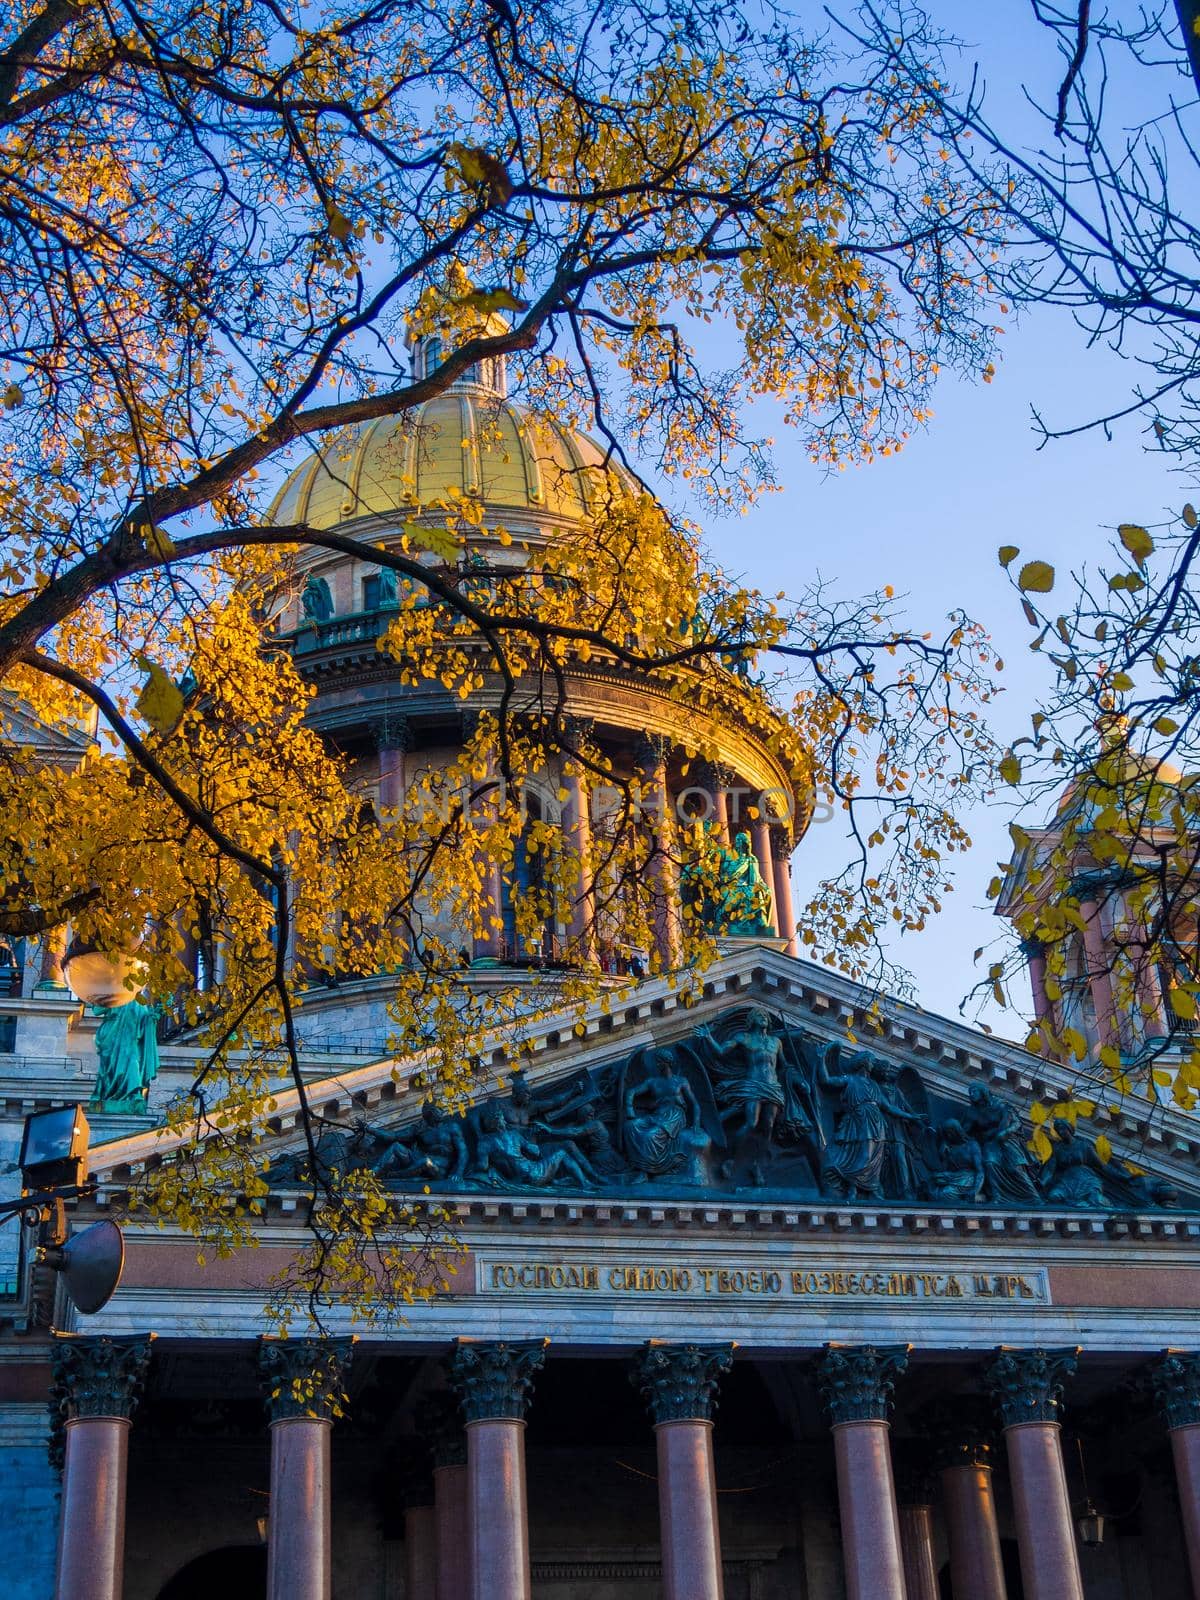 Saint Petersburg, Russia, November 2020: St. Isaac's Cathedral in Saint-Petersburg, Russia. by Andre1ns